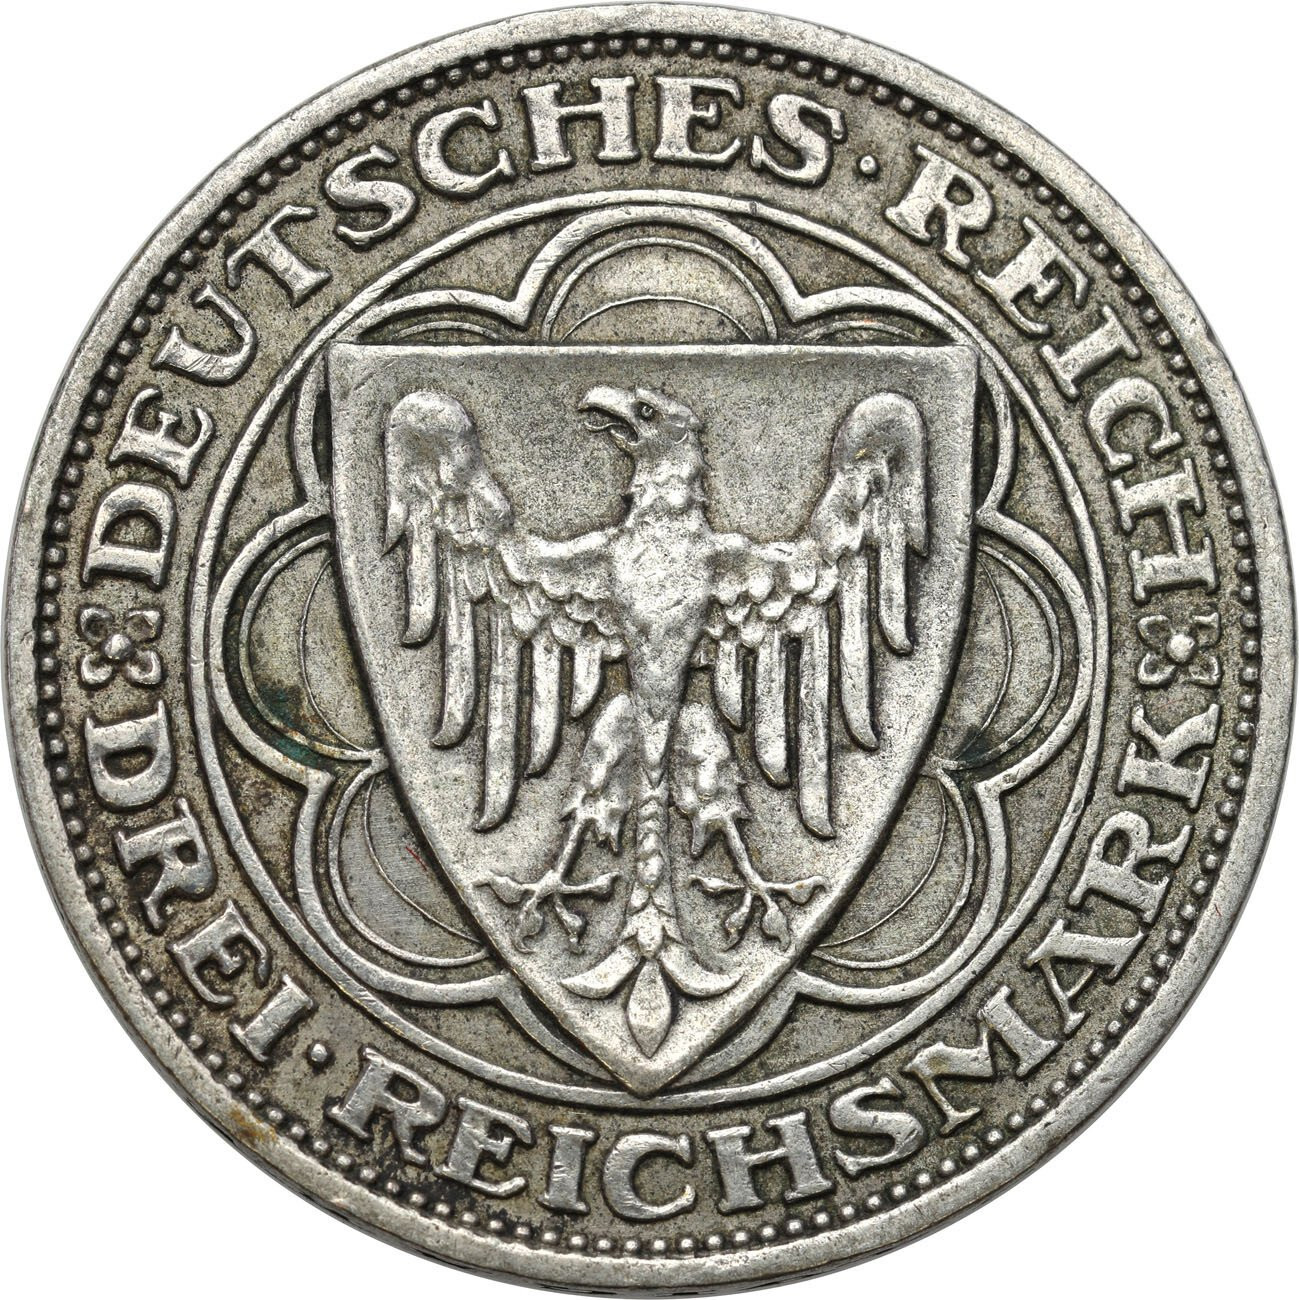 Niemcy, Republika Weimarska. 3 marki 1927 A, Berlin 